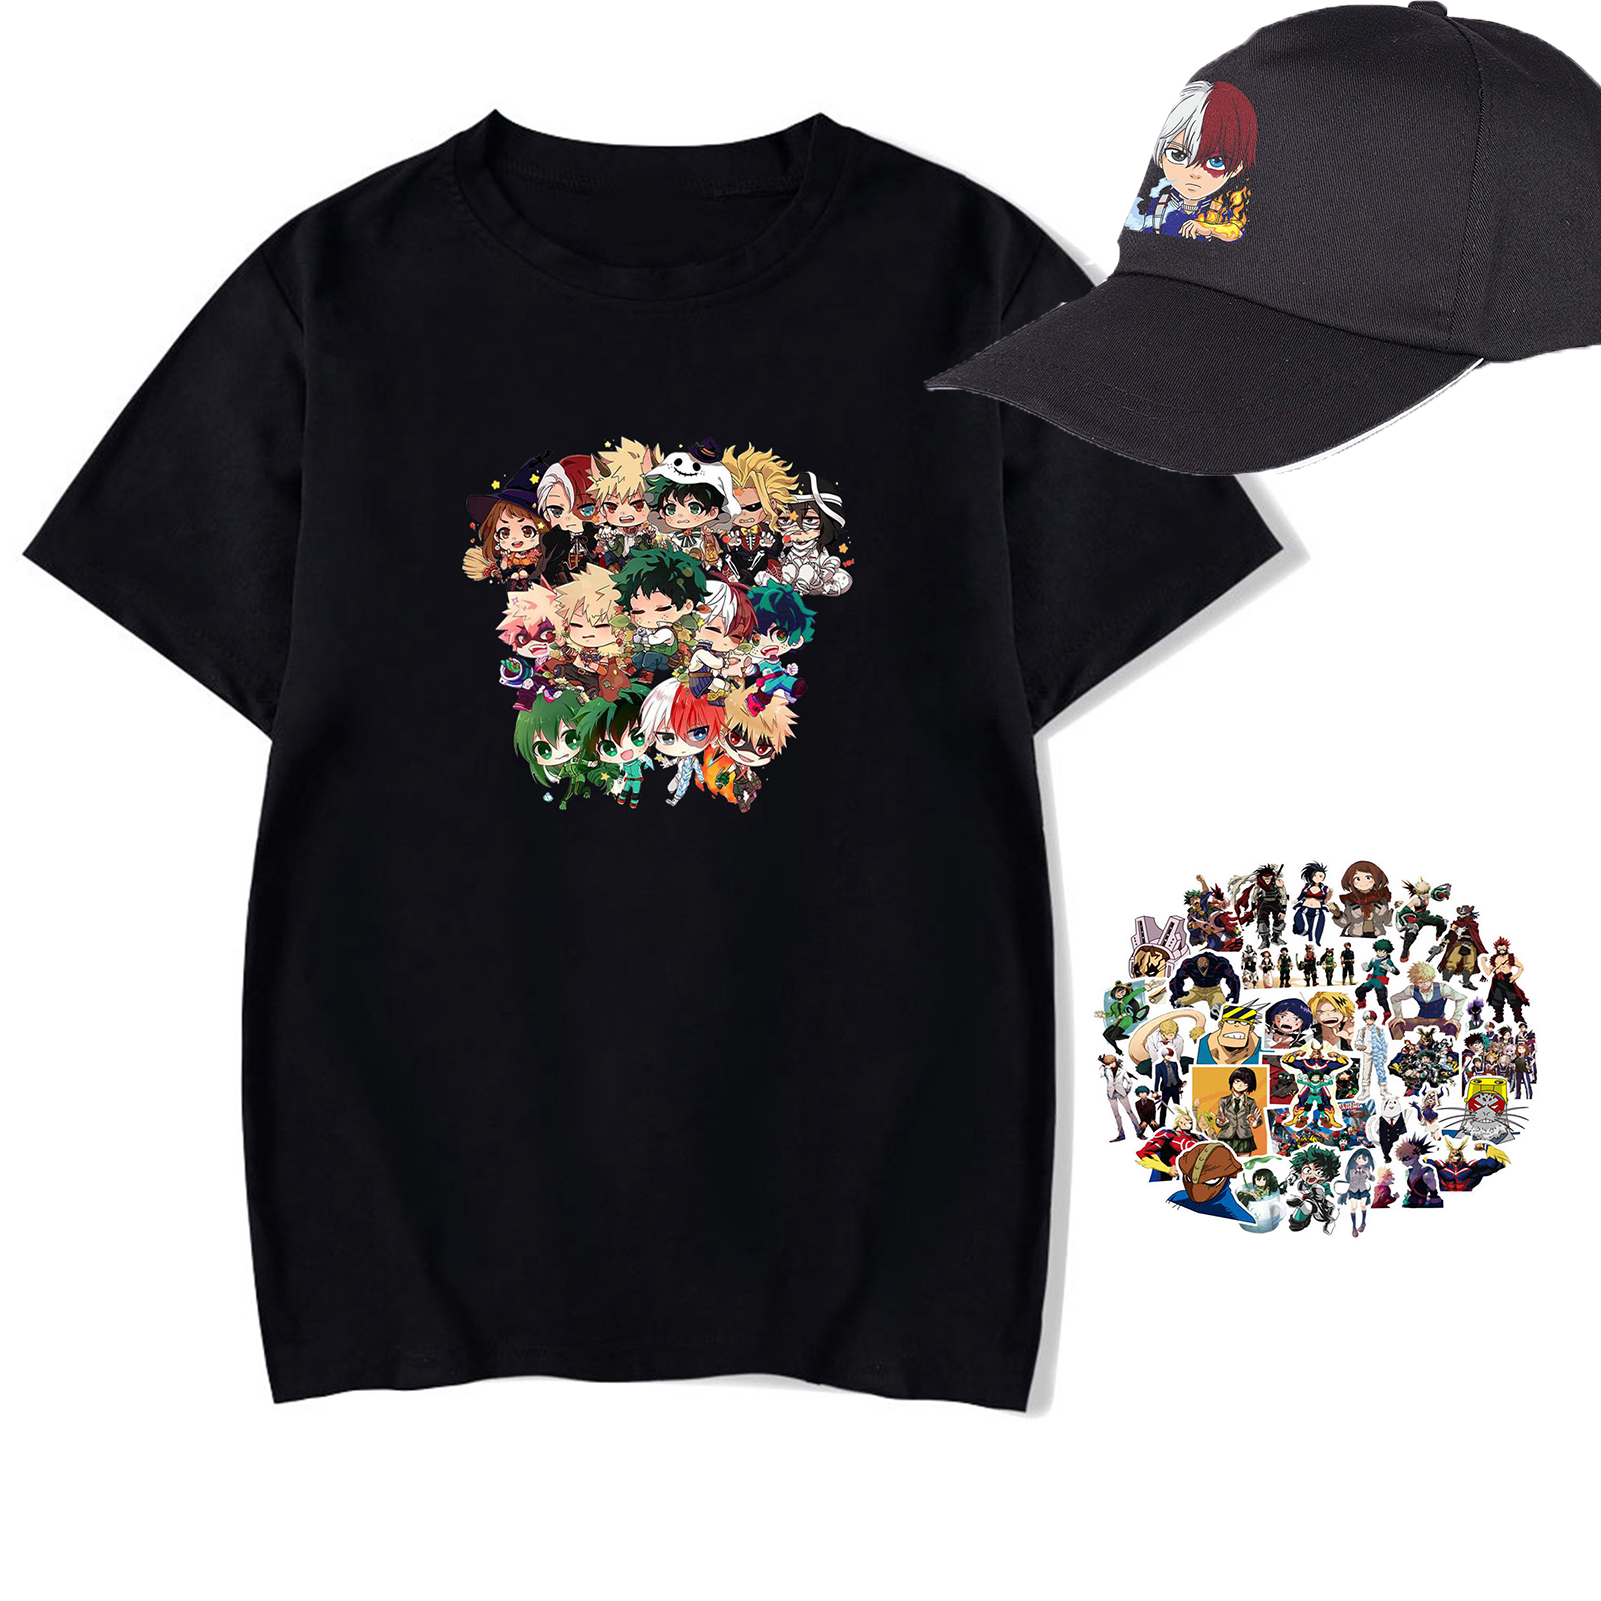 SOSPIRO Unisex My Hero Academia T Shirts Midoriya Bakugo Cosplay with Baseball Cap Sun Hat & 50pcs Anime Academia Stickers Gifts Set(Black-M) - image 1 of 7